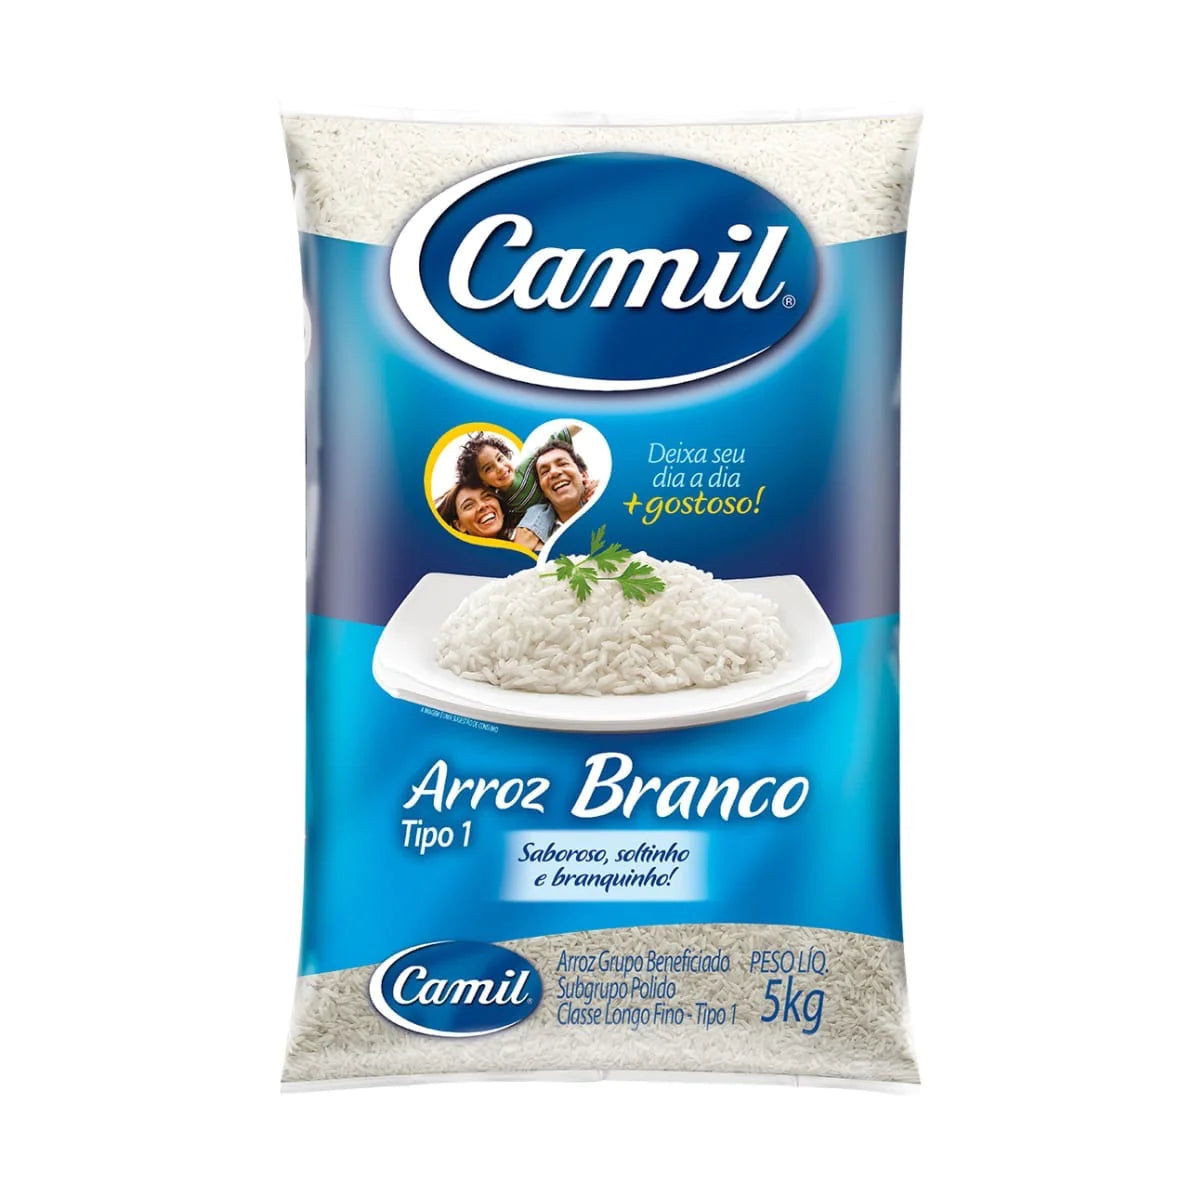 CAMIL - Arroz branco - 1kg